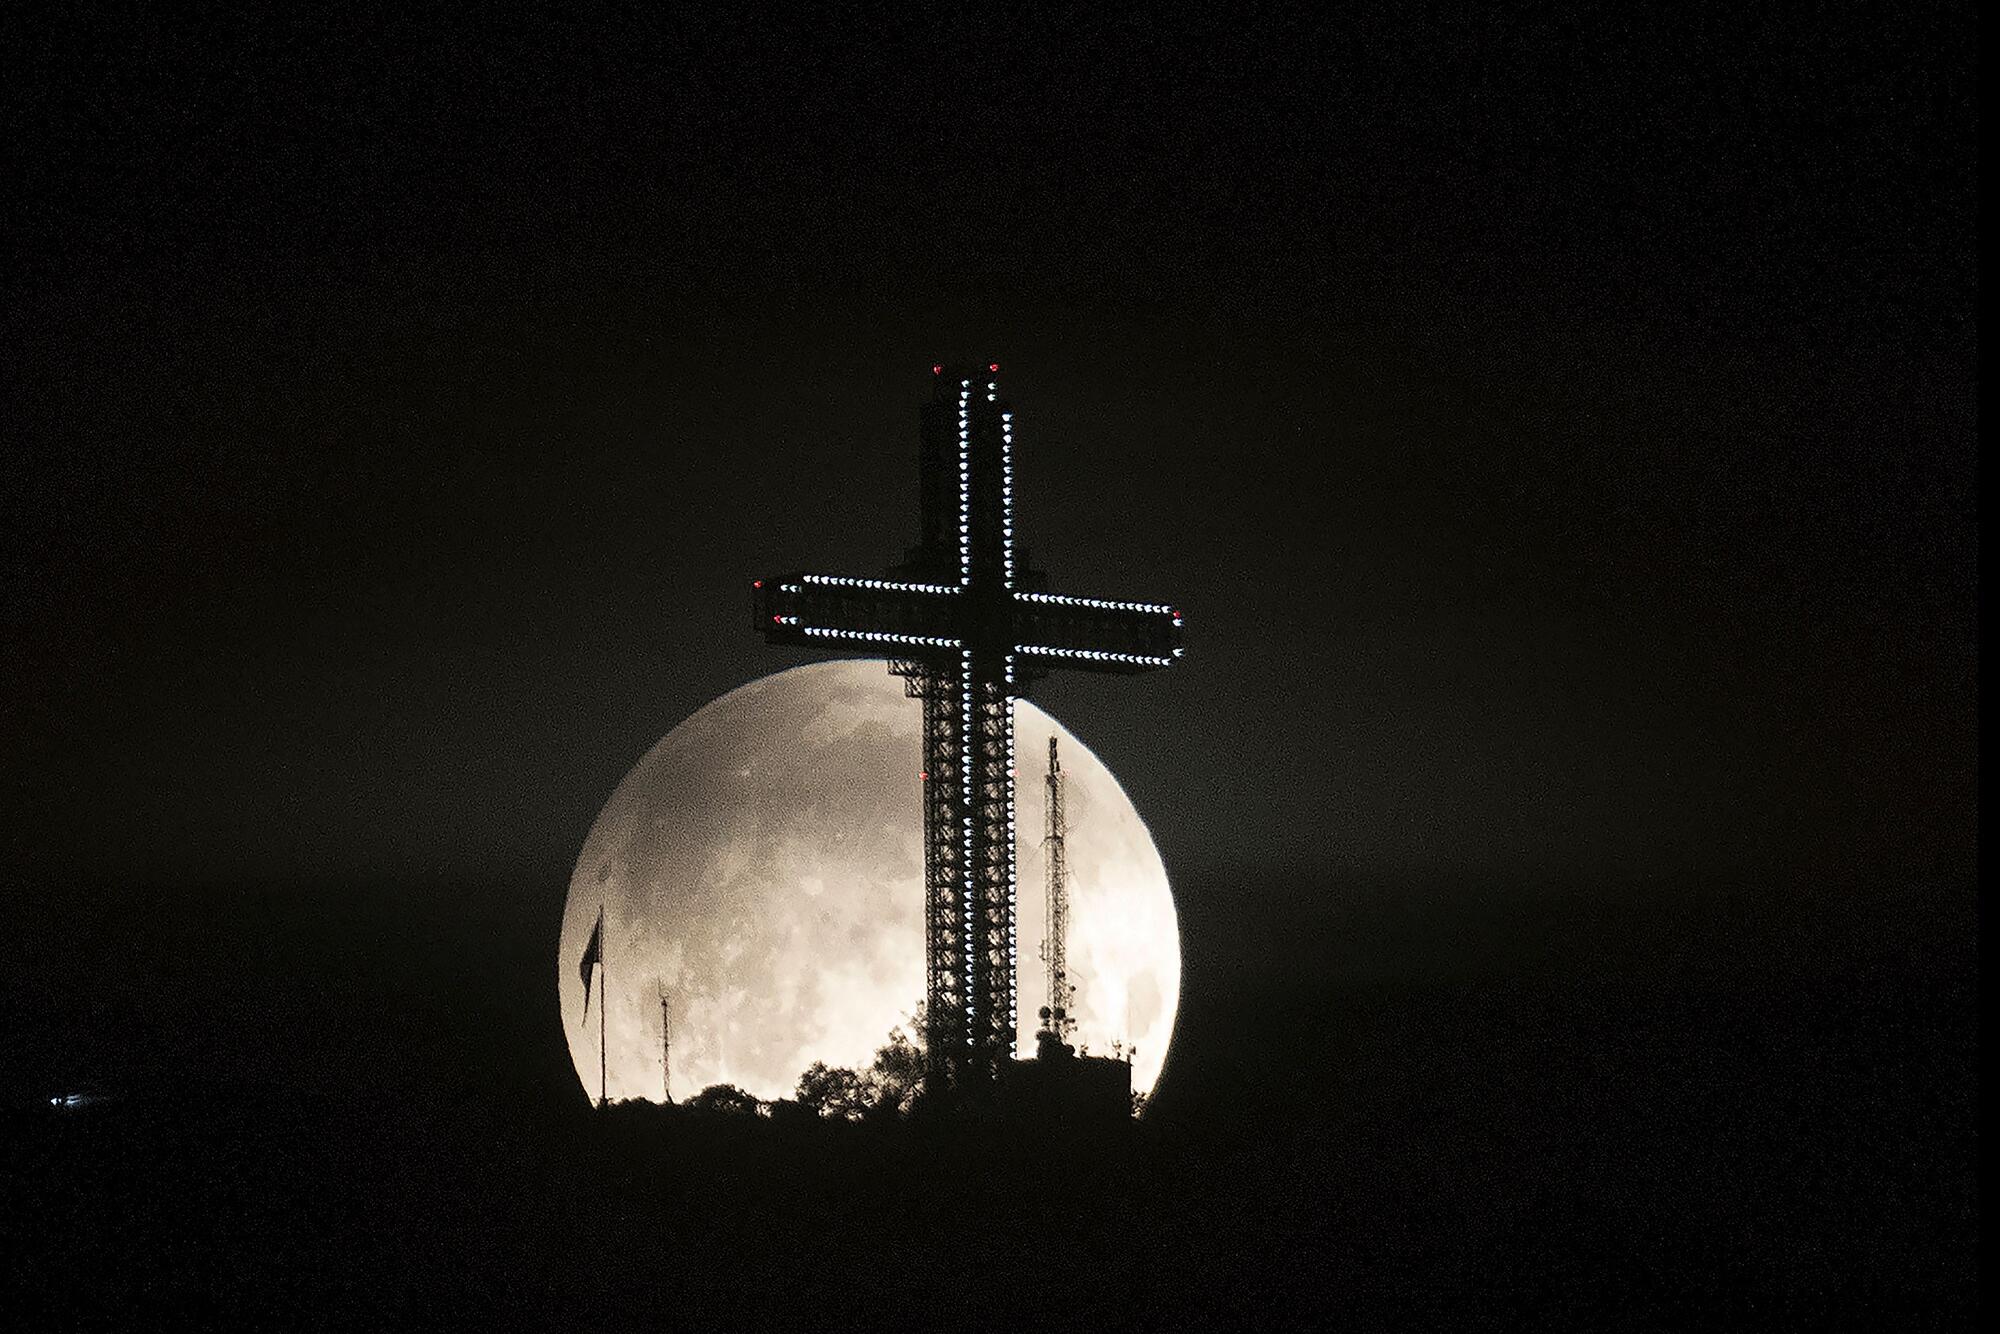 The full moon rises behind an illuminated cross.